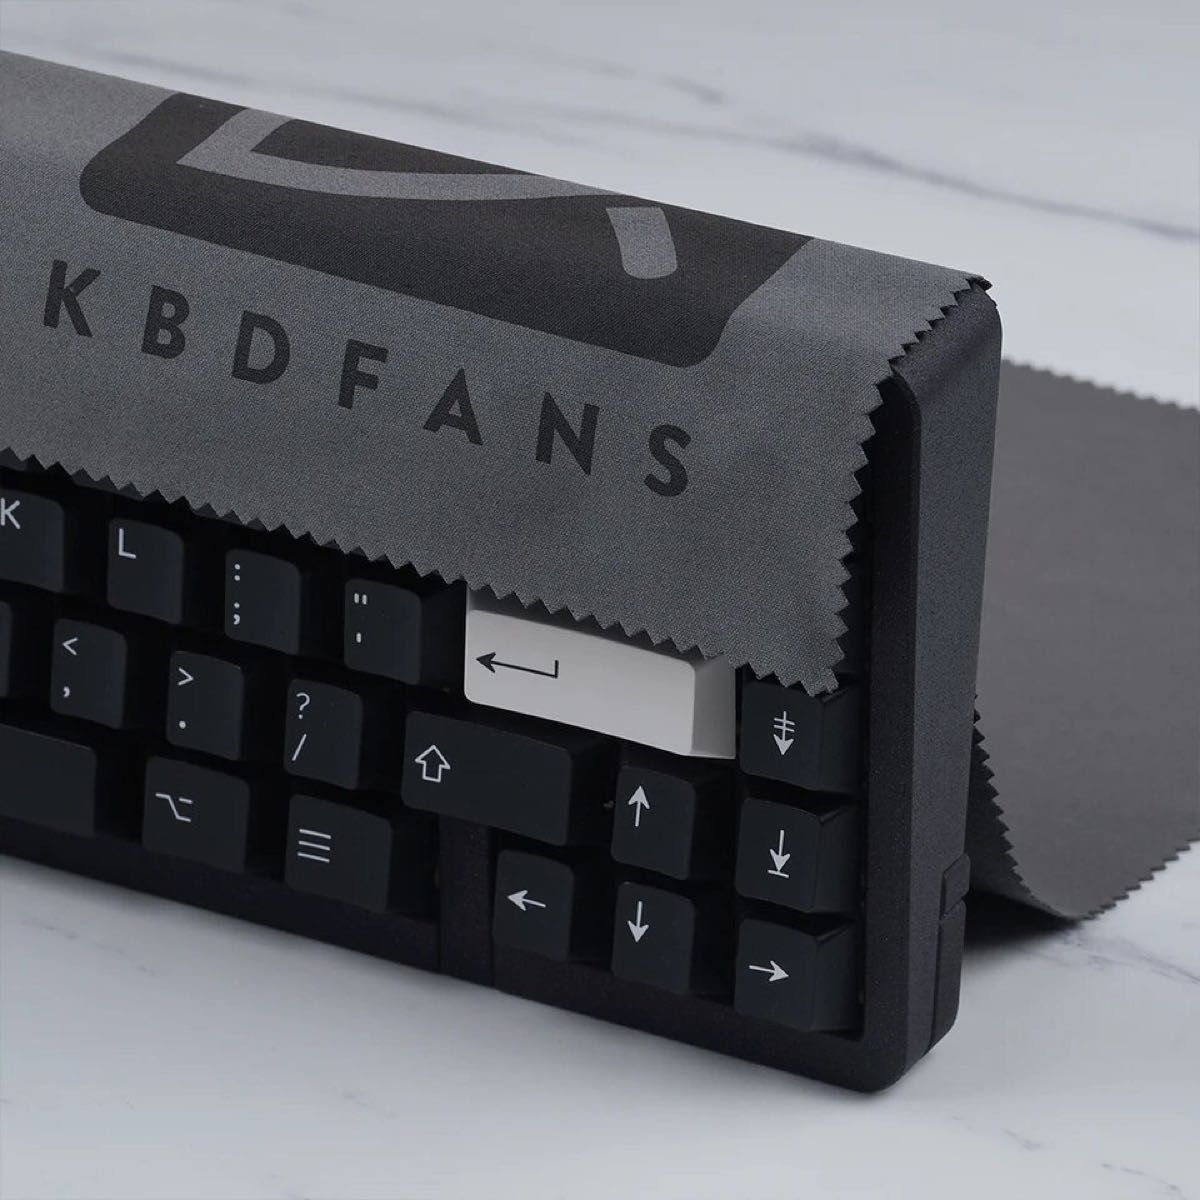 Kbdfansキーボードカバー布マイクロファイバー防塵キーボードブランケットカバー